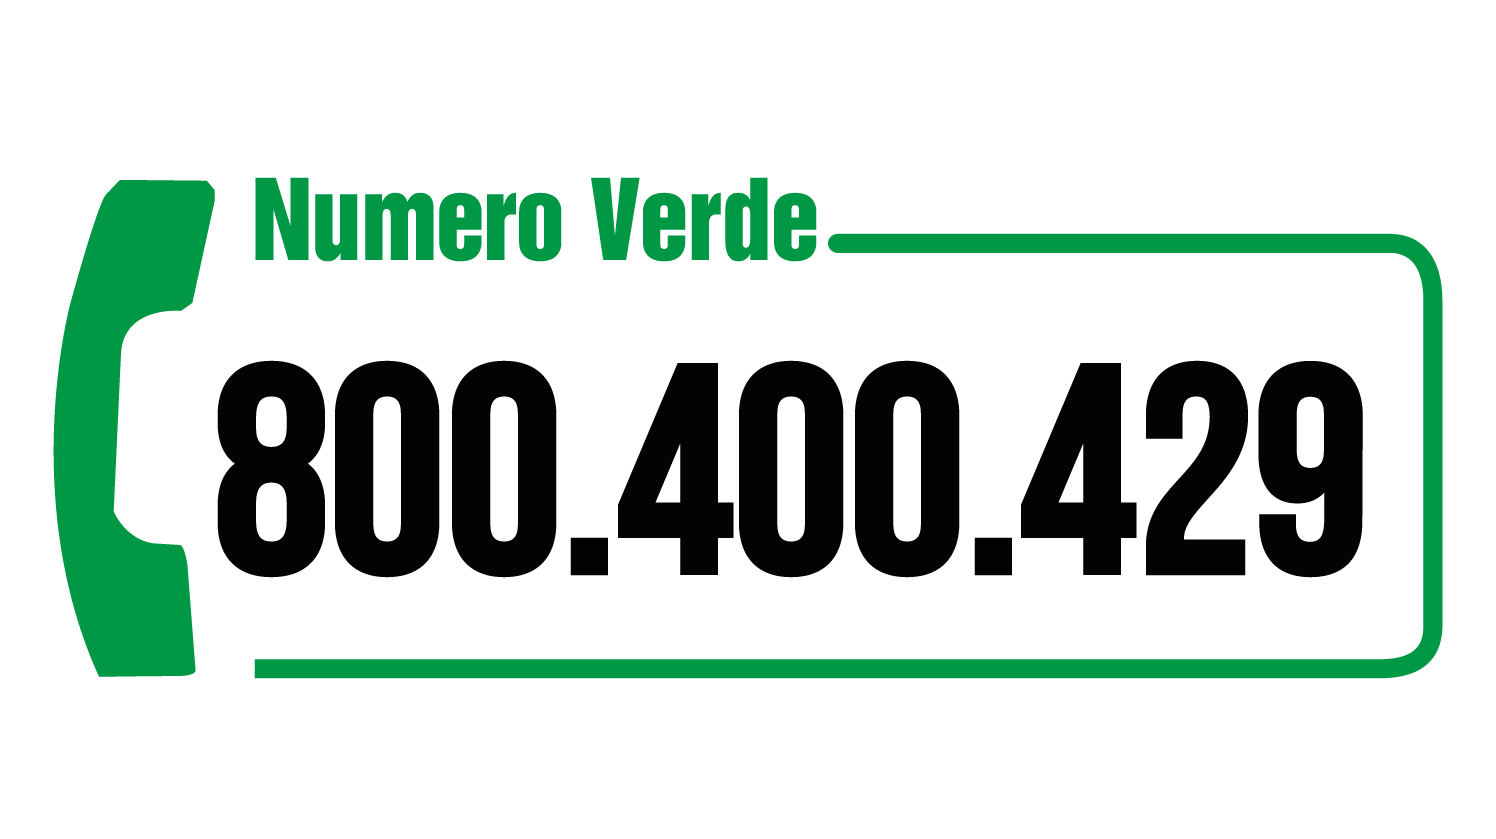 Numero_Verde_SOS-01